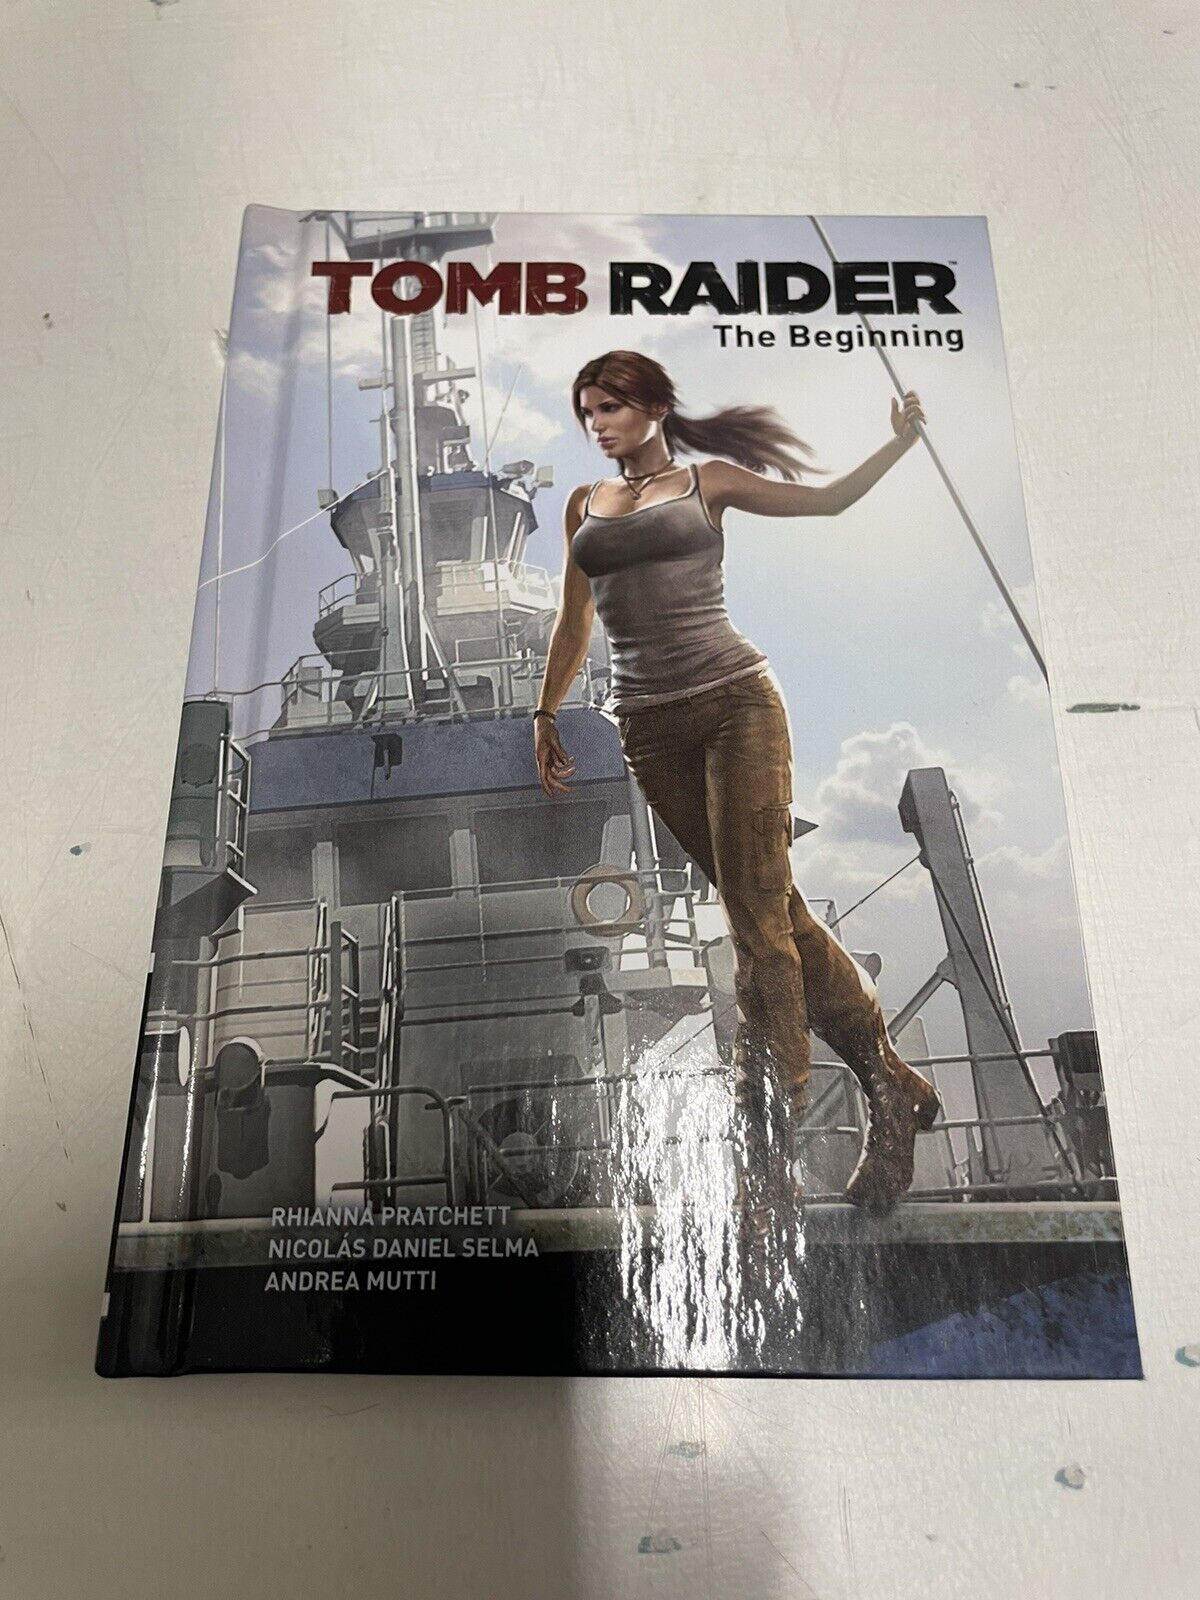 Ps3-Playstation-Tomb-Raider-Pal-ita-Artbook-Comics-The-Beginning-Bundle-134347618701-8